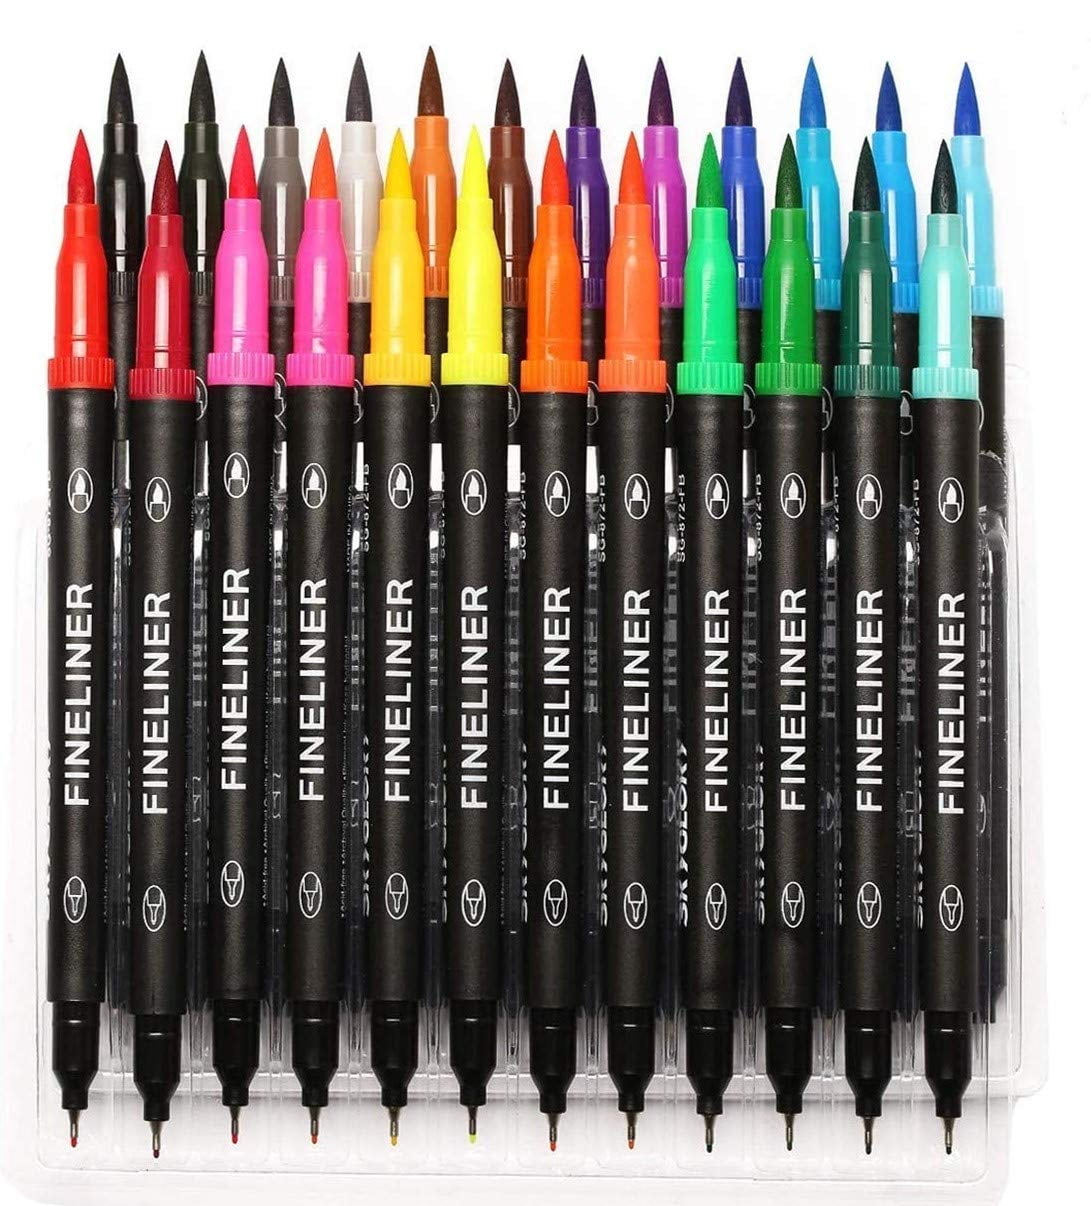 12 Fine liner Point Tip Pen Black Brush Marker Black Calligraphy Drawing Writing